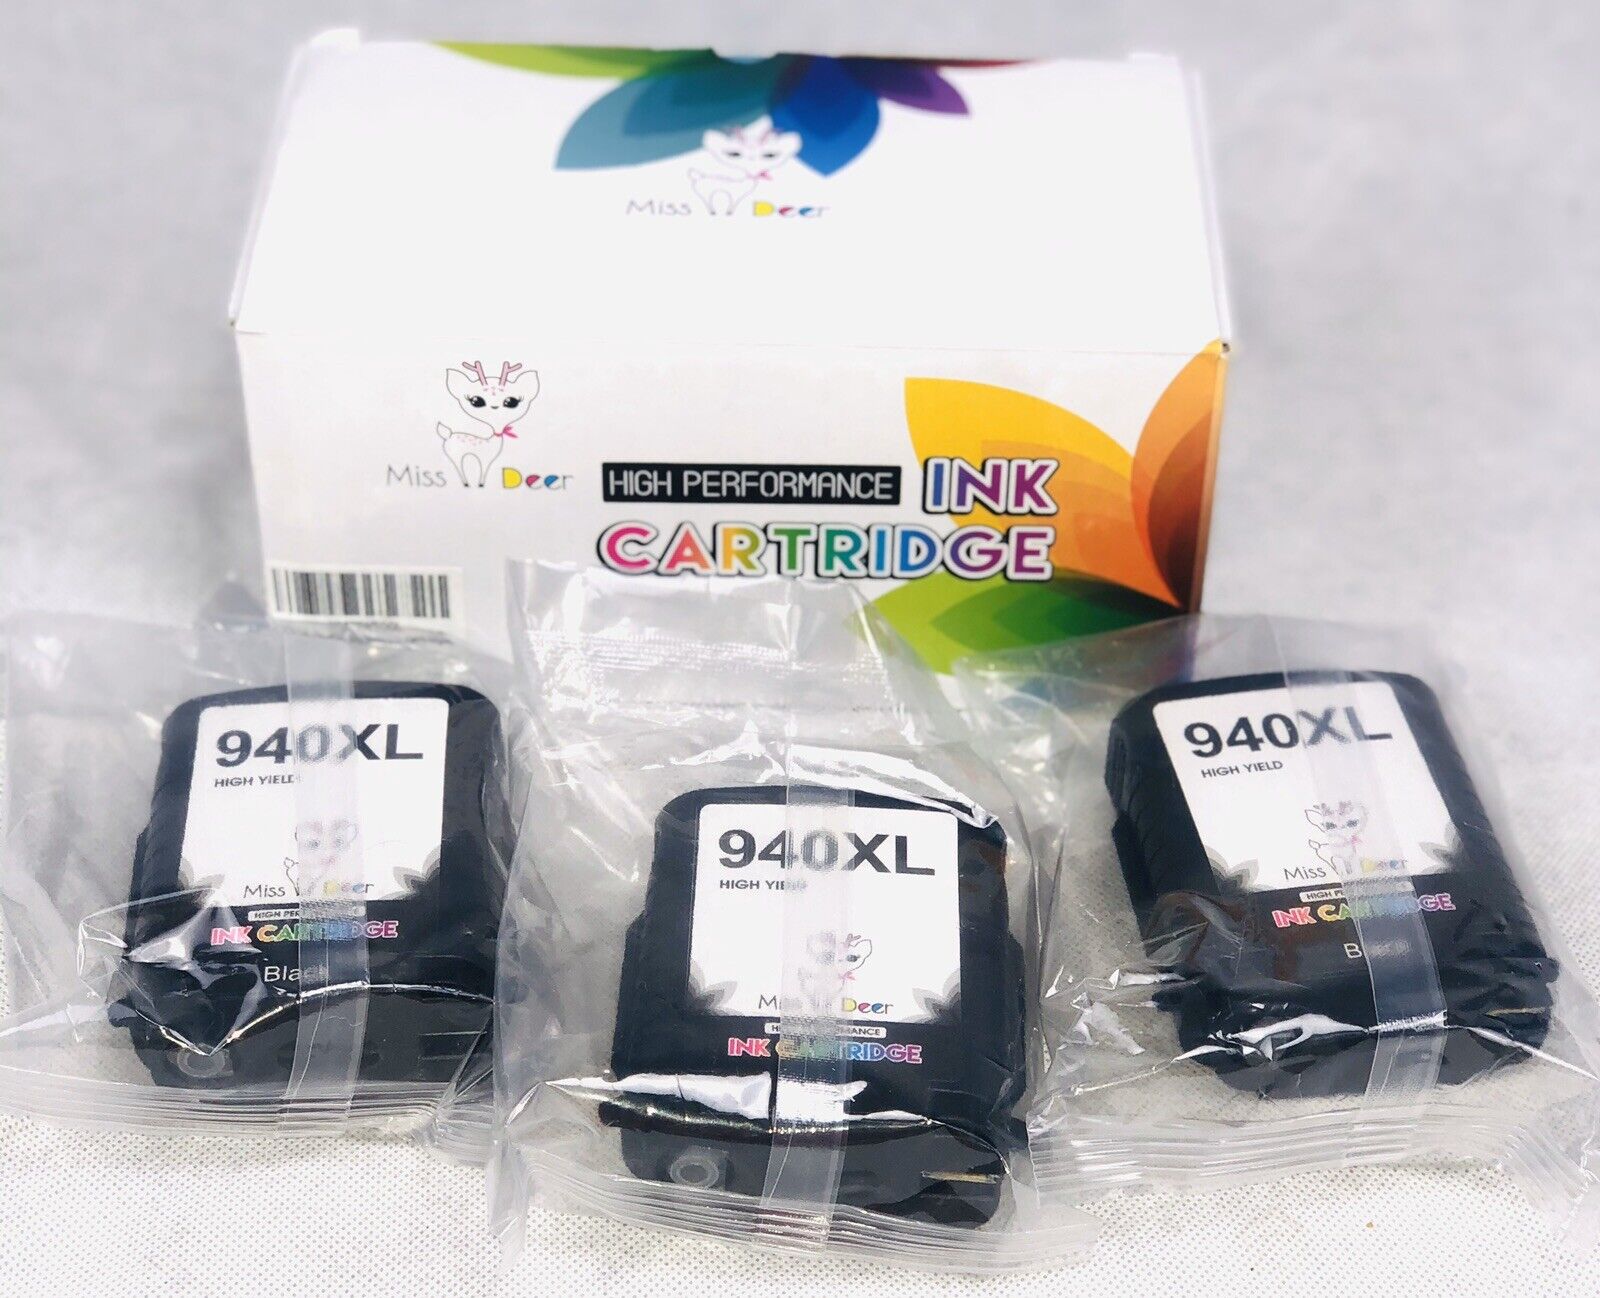 Lot of 3 Miss Deer HP 940XL Black High Performance Compatible Ink Cartridges